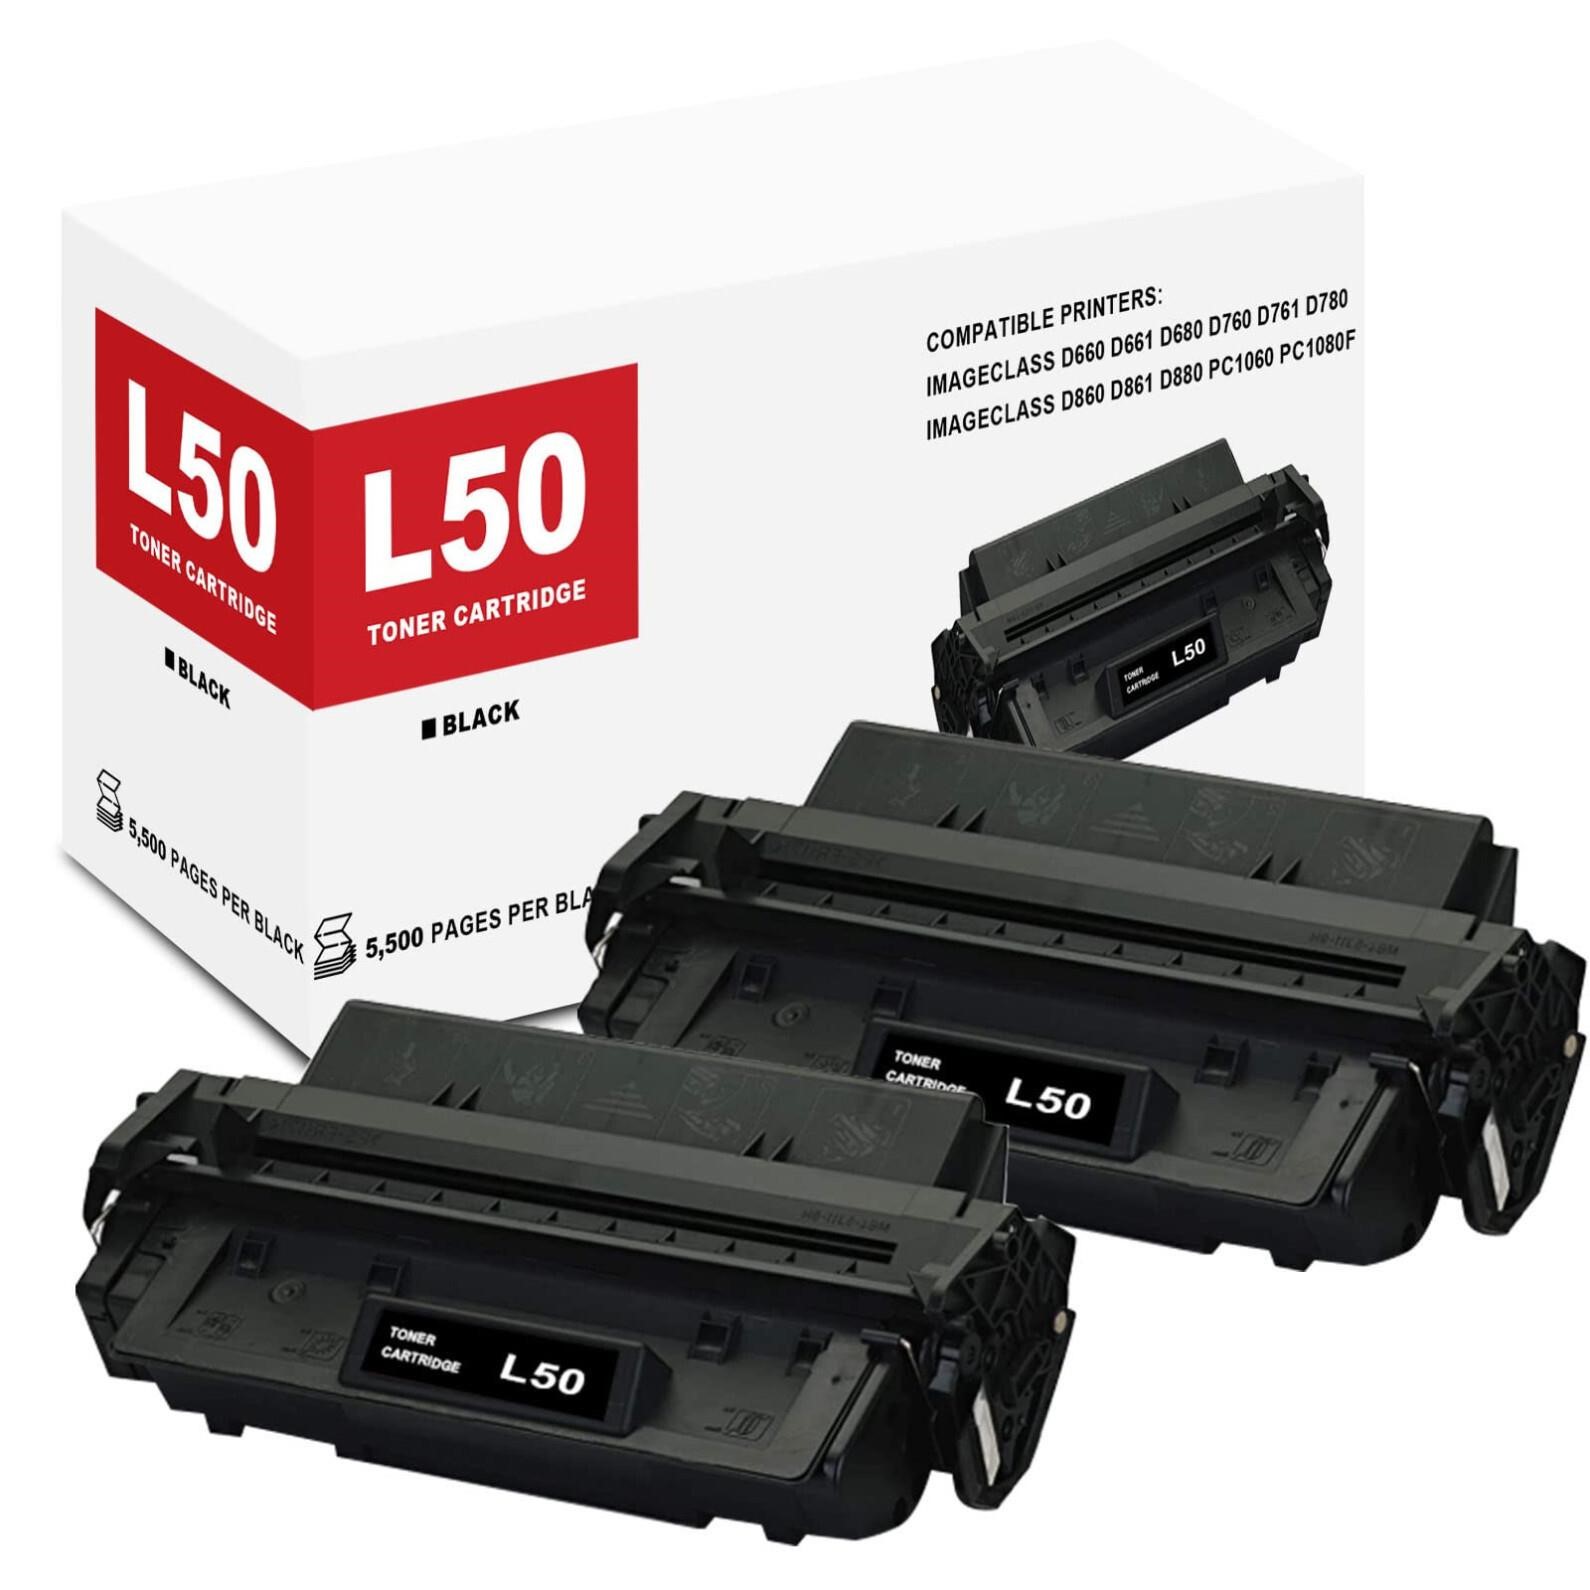 L50 Black Toner Cartridge Replacement for Canon L